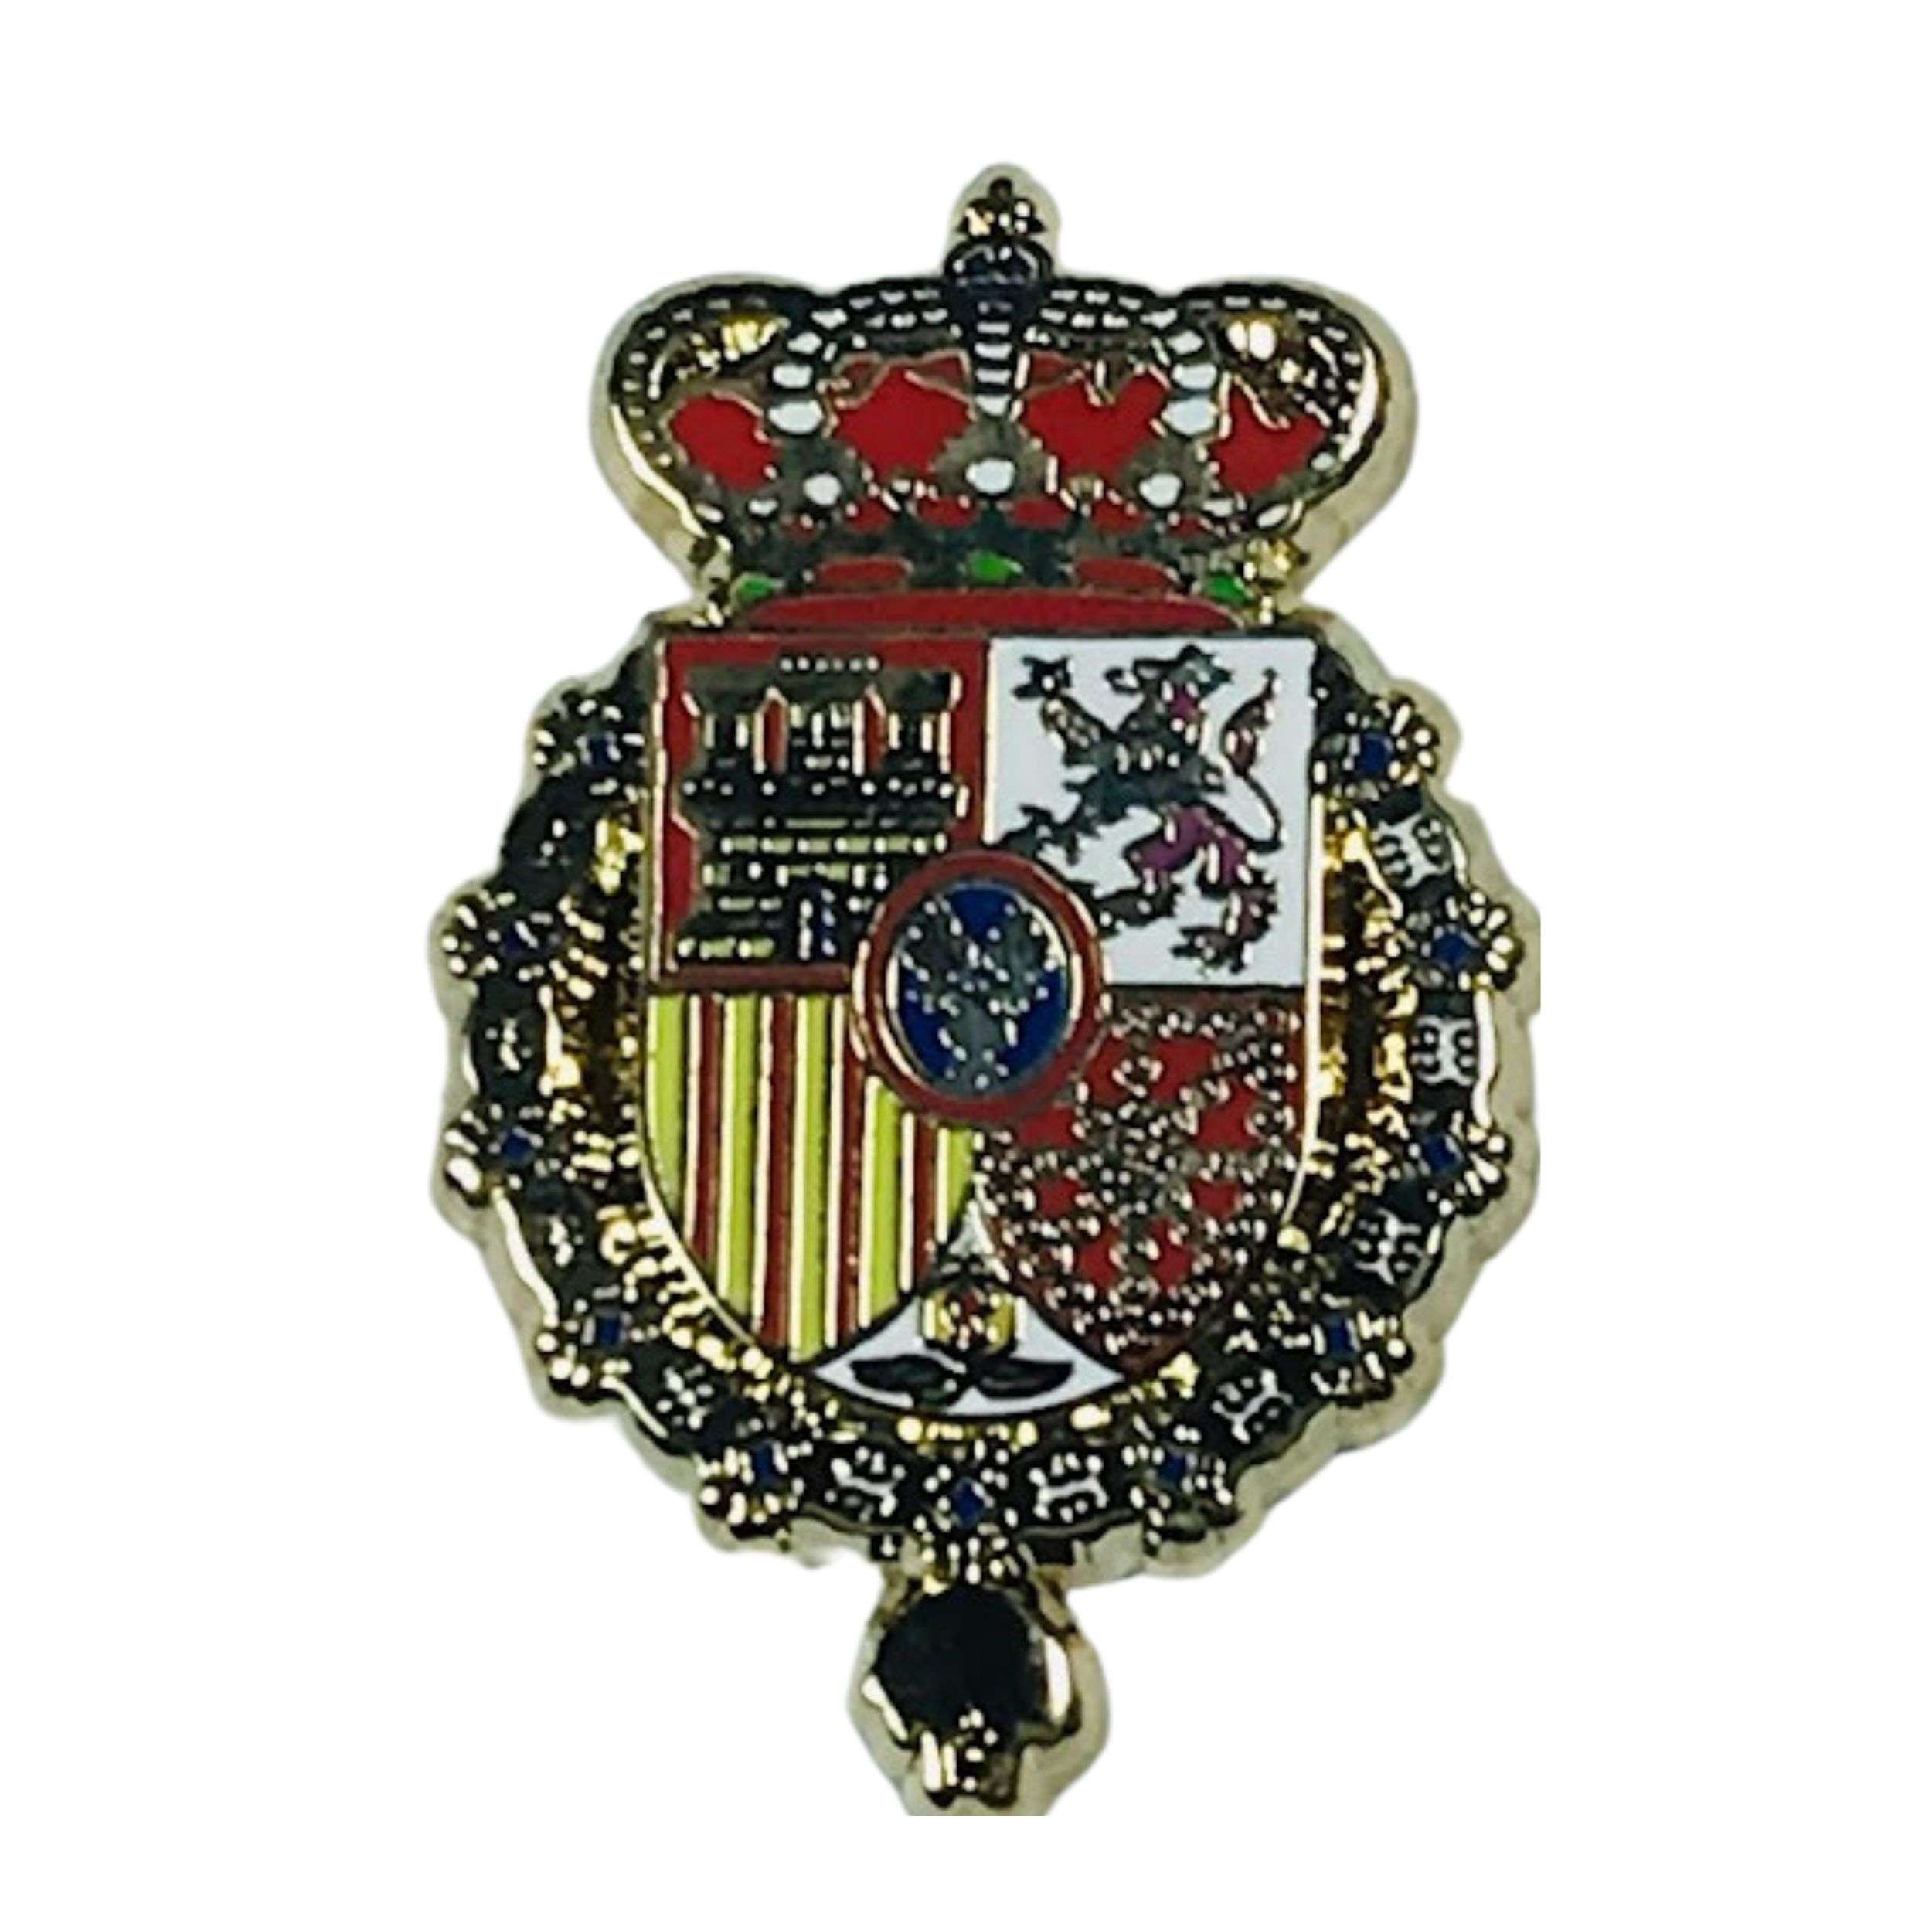 Pin Escudo de Armas del Rey de Espana Espana